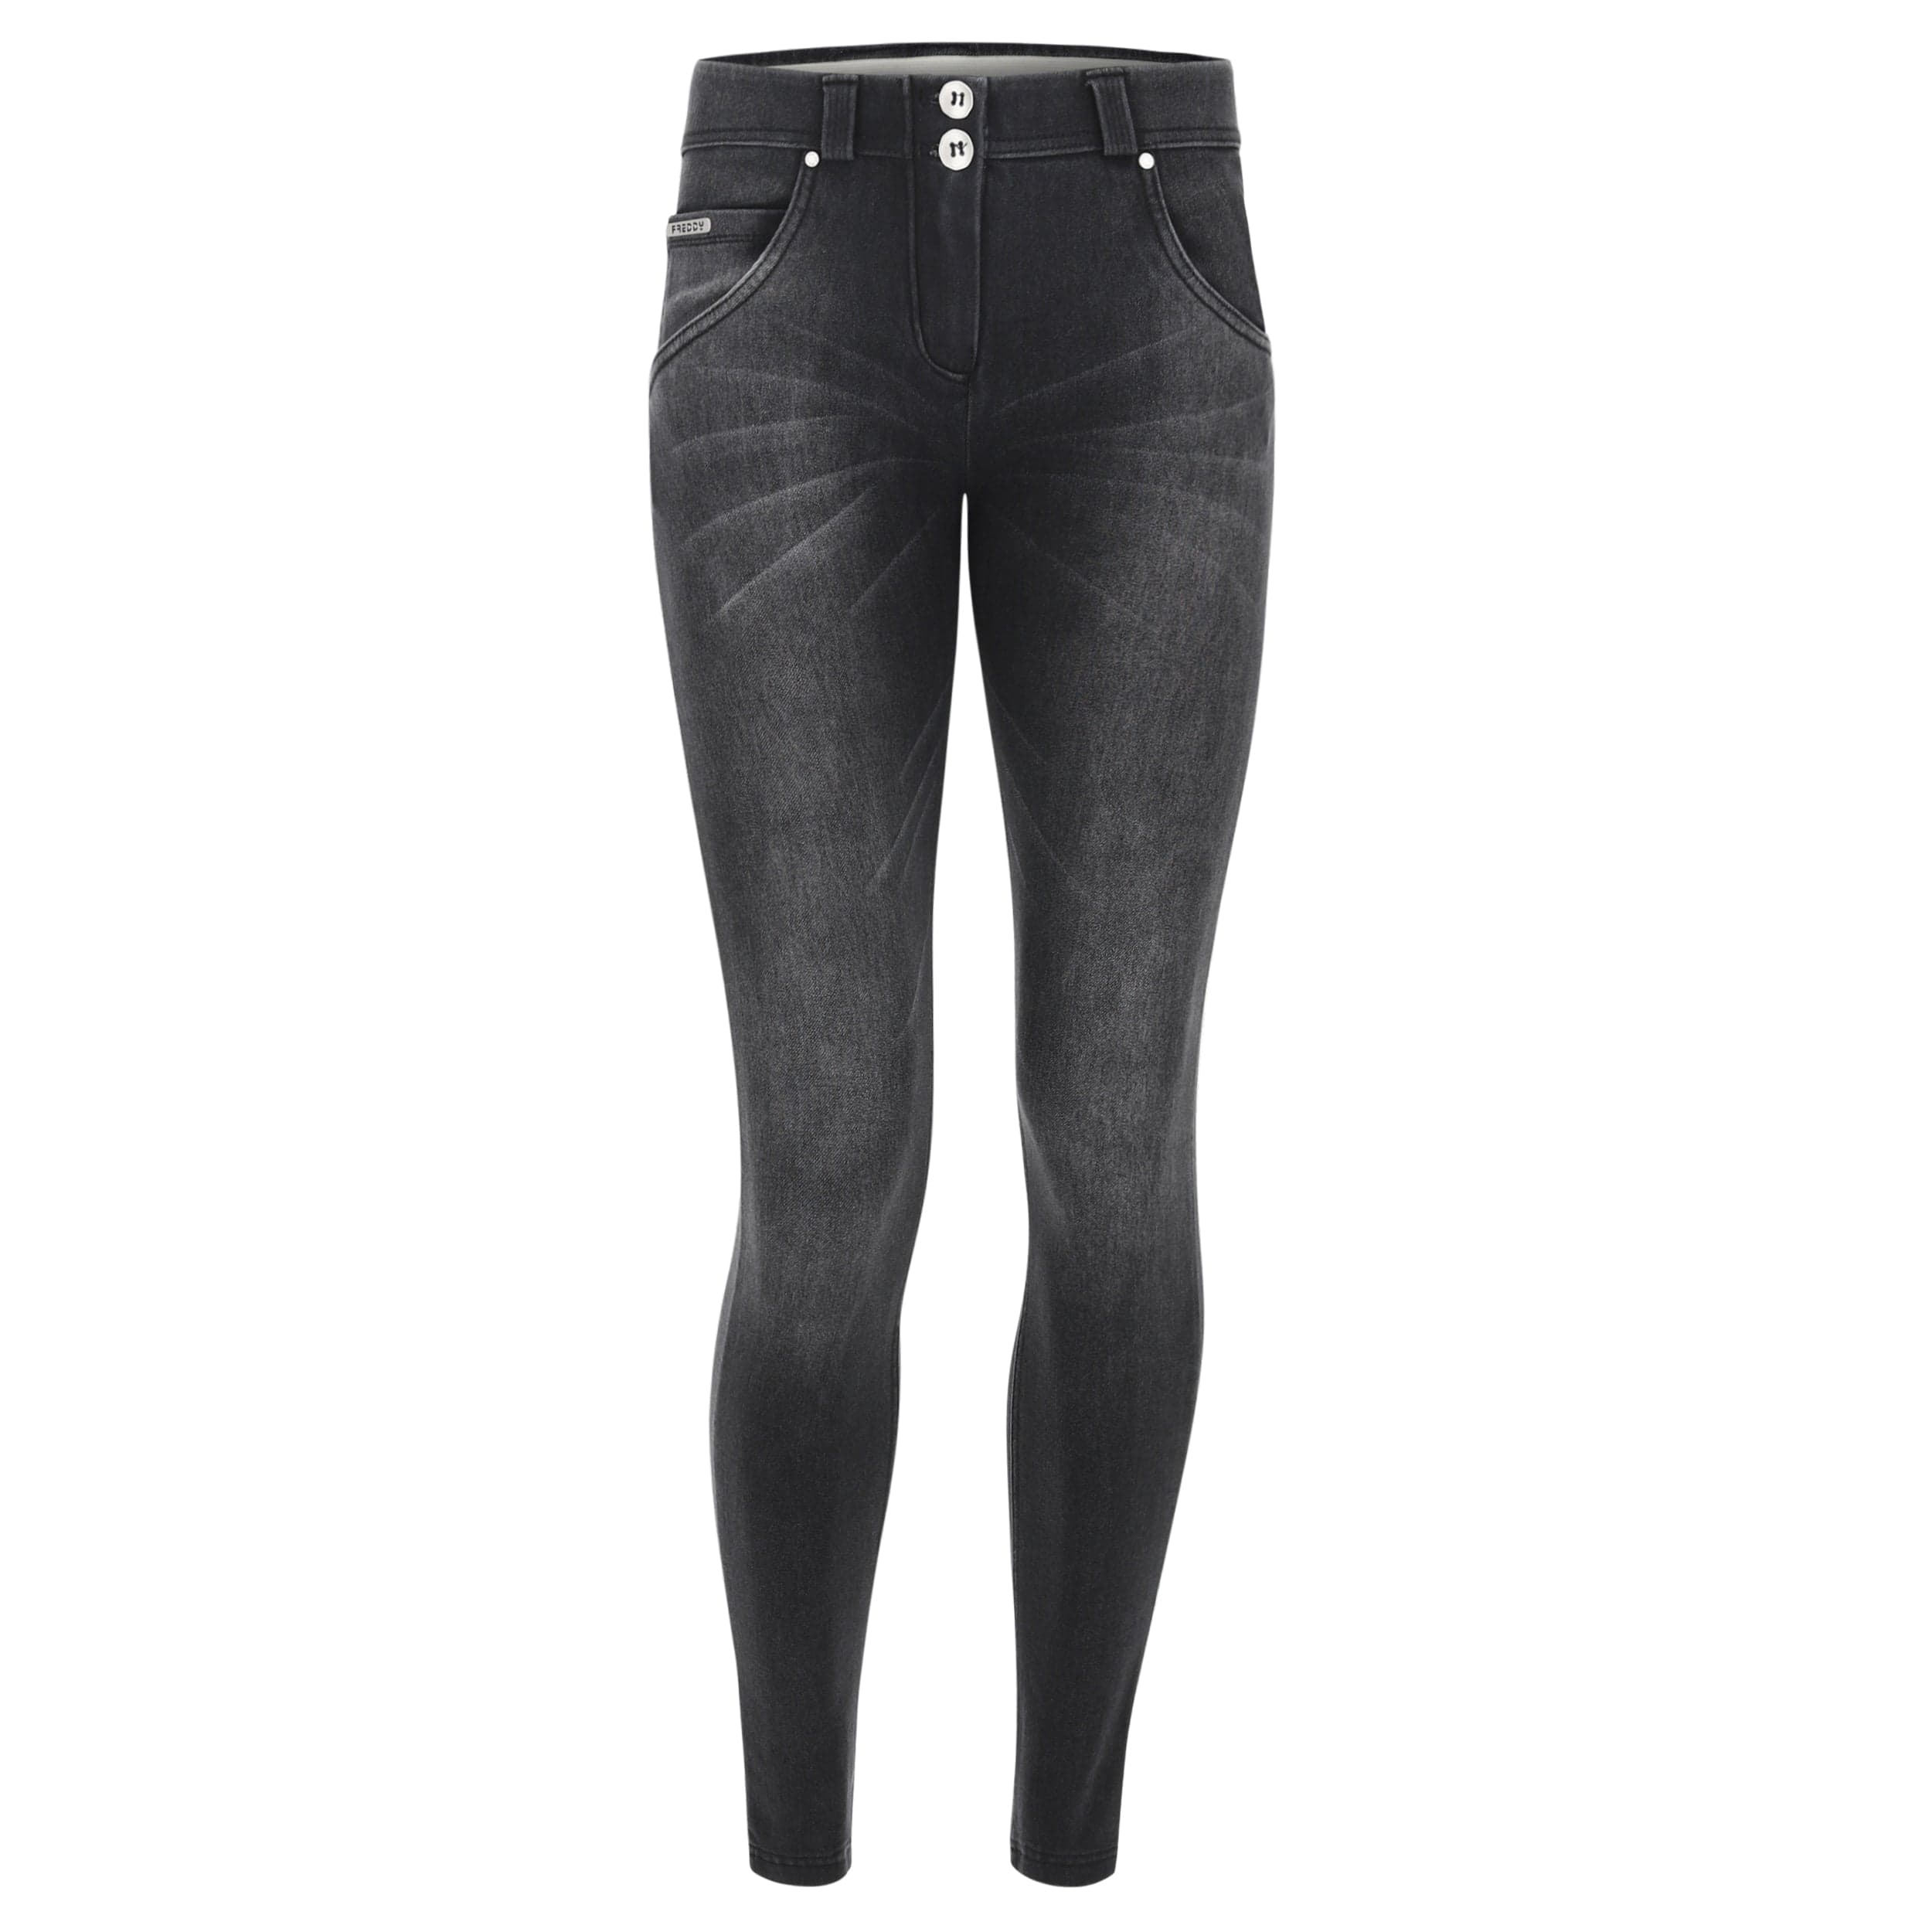 WR.UP® SNUG Jeans - Mid Rise - Full Length - Black + Black Stitching 2